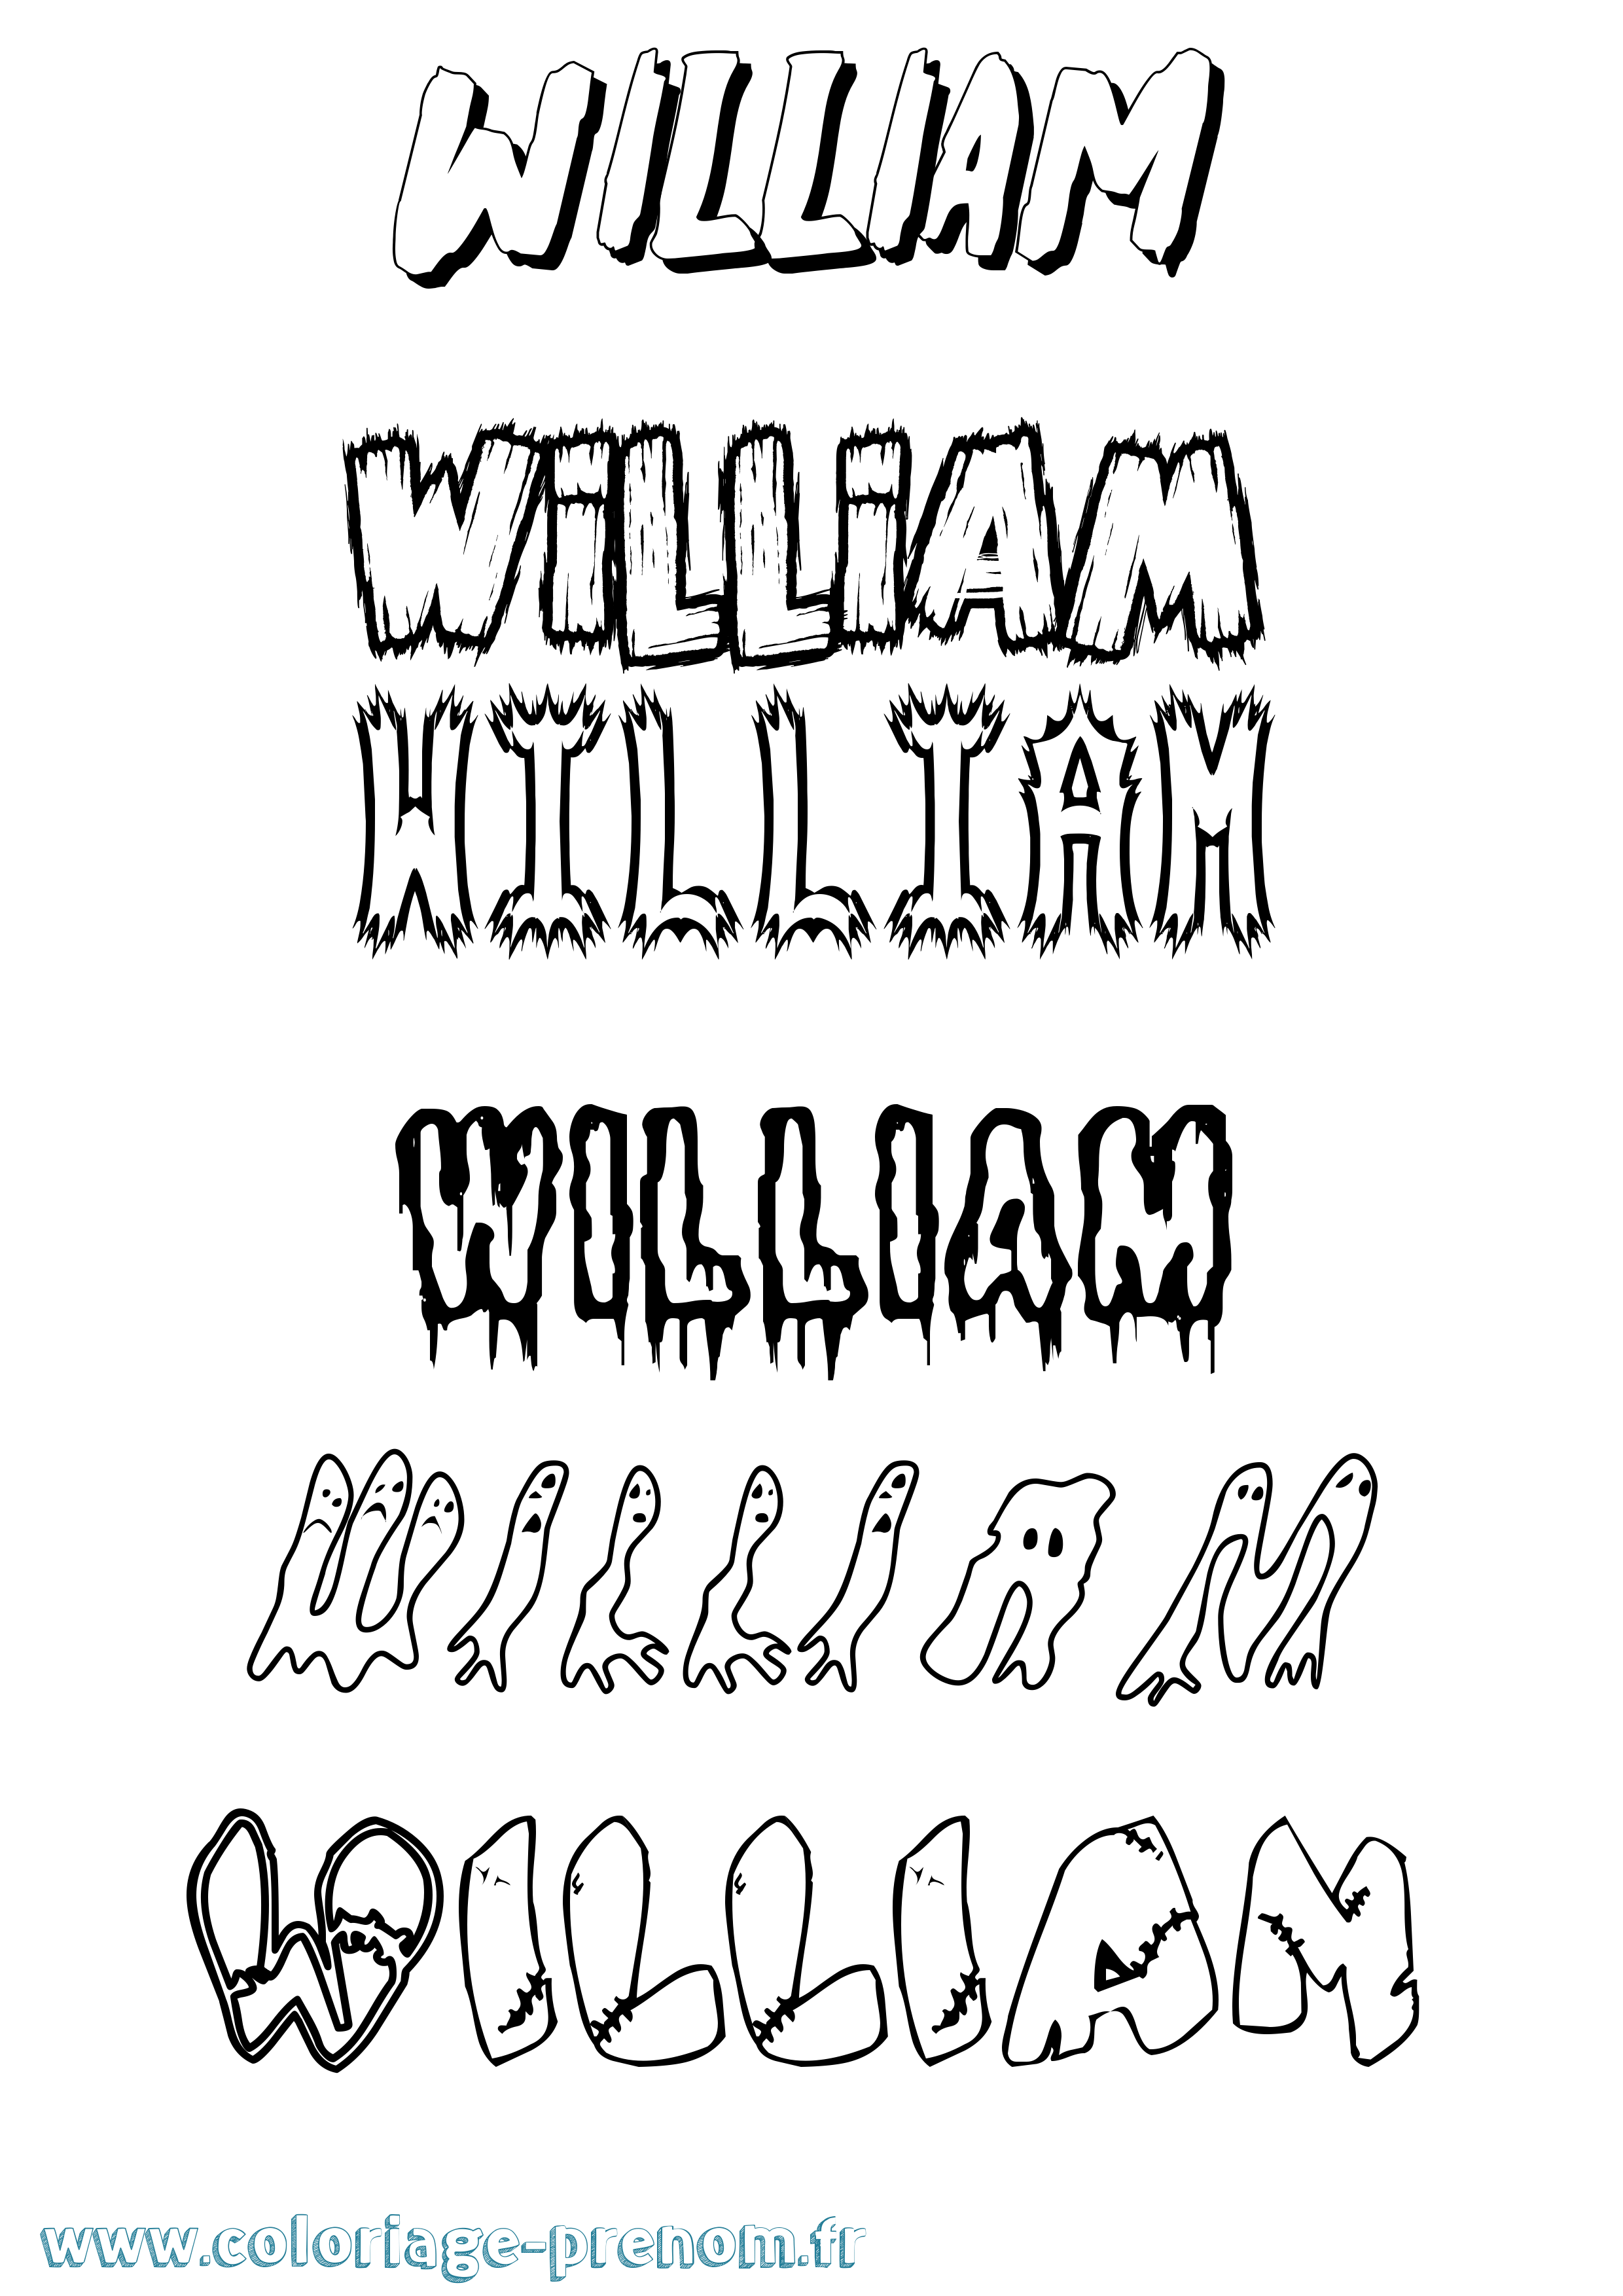 Coloriage prénom William